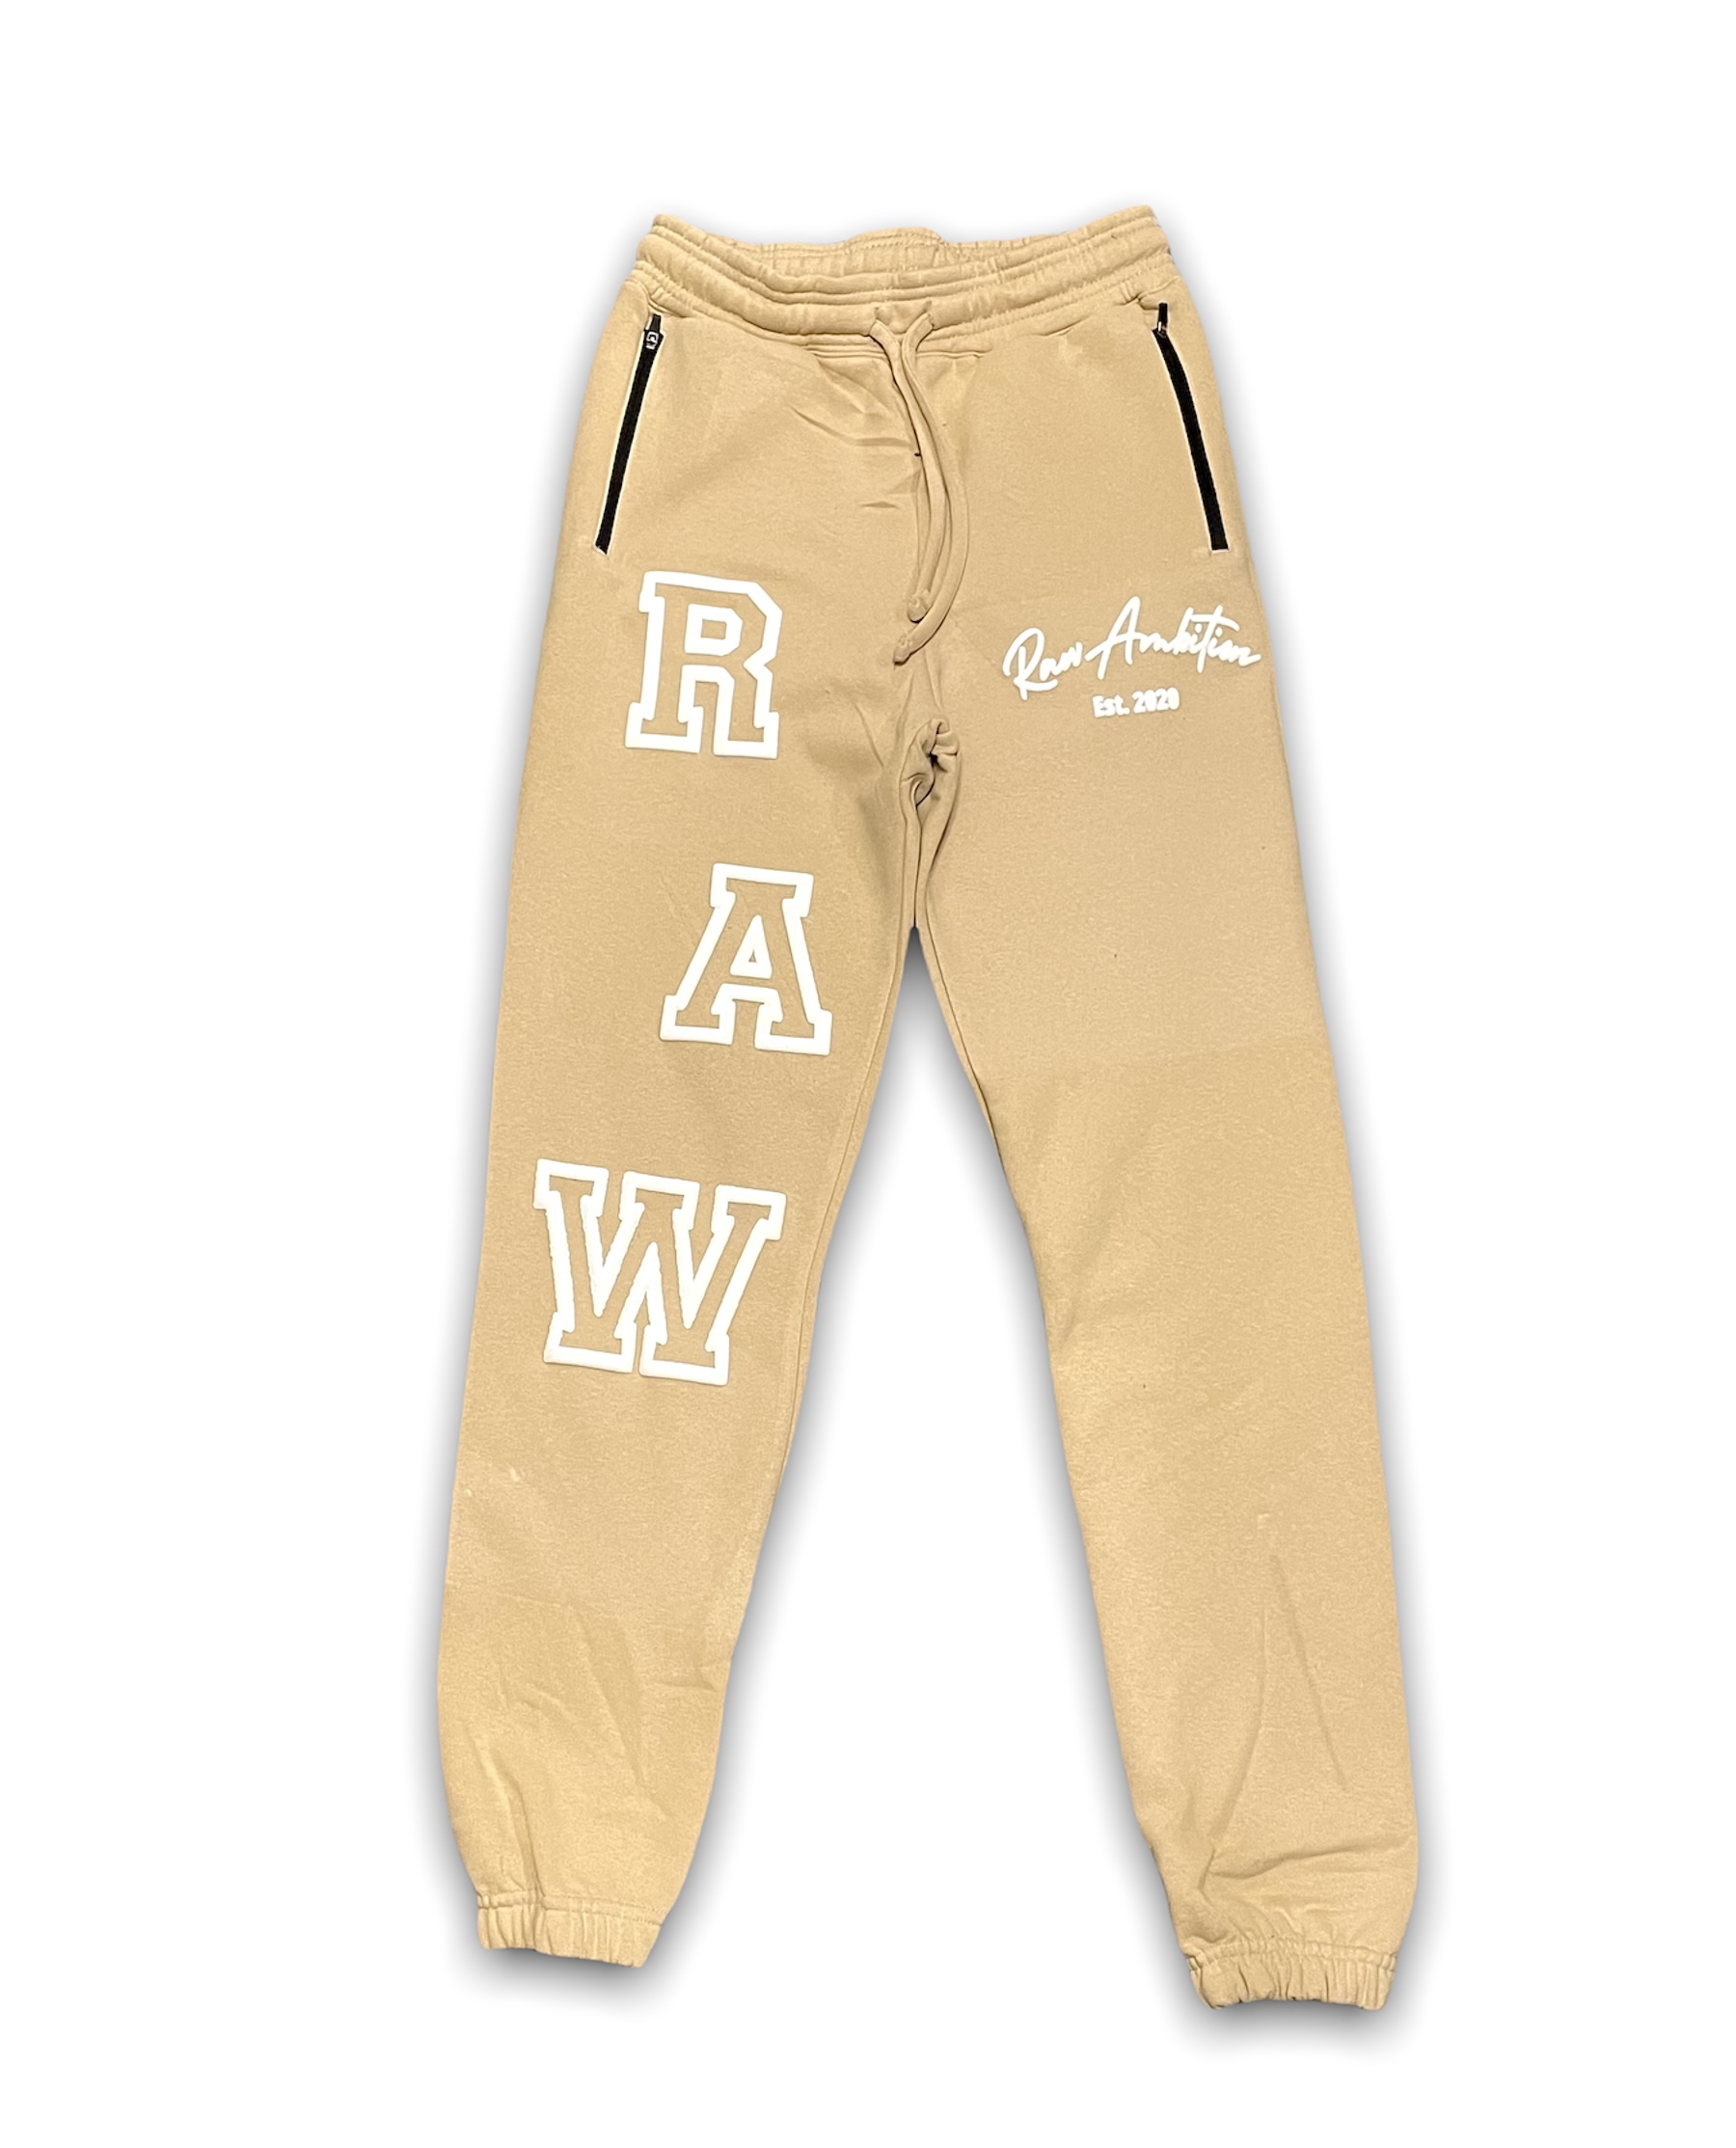 RAW AMBITION Raw Jogger Pants - Raw Ambition Apparel